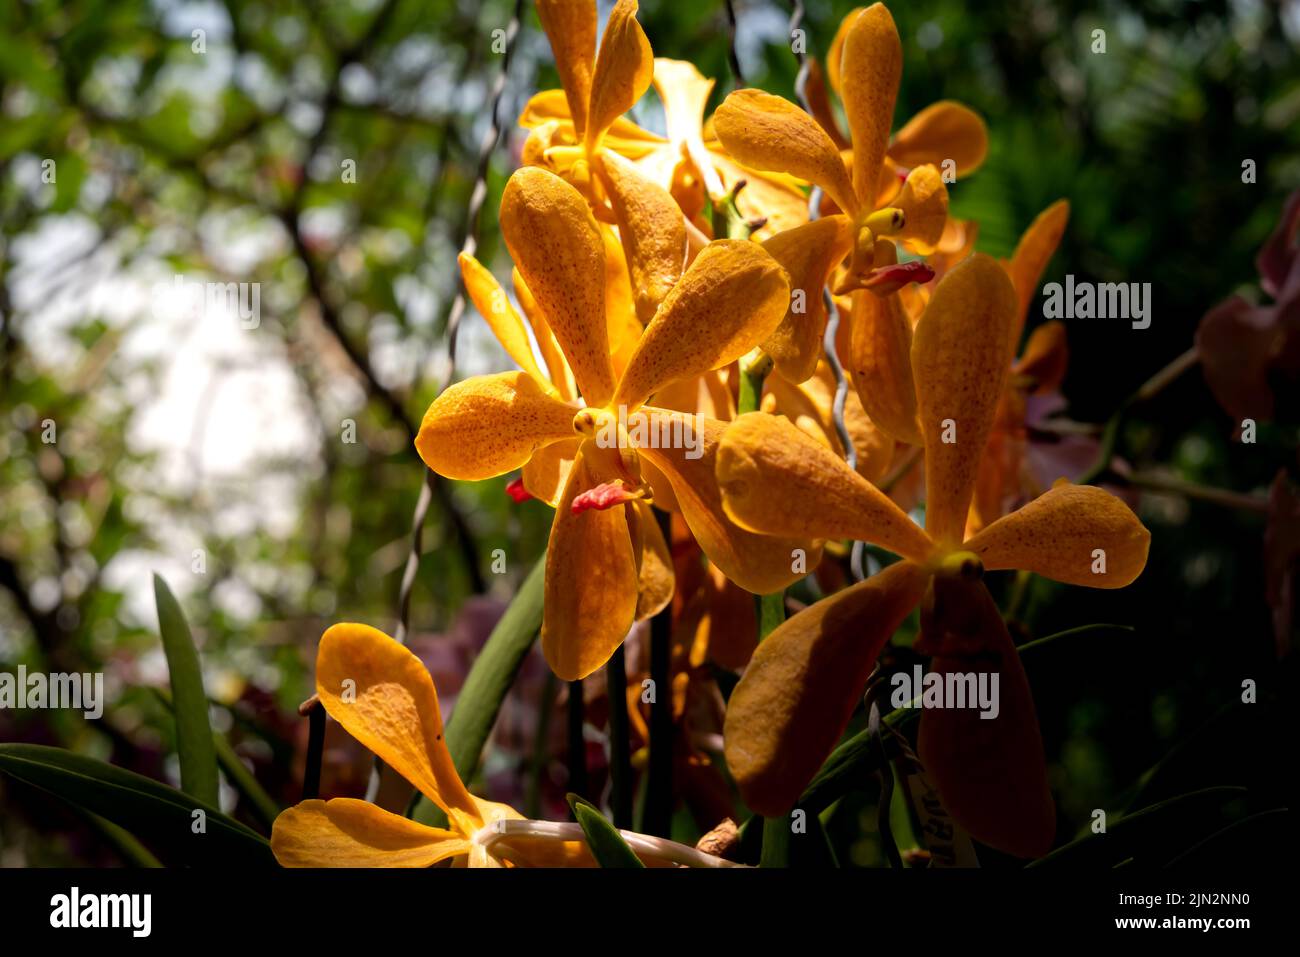 Orange lily. Lilium bulbiferum, common names orange lily. Natural lighting. Stock Photo